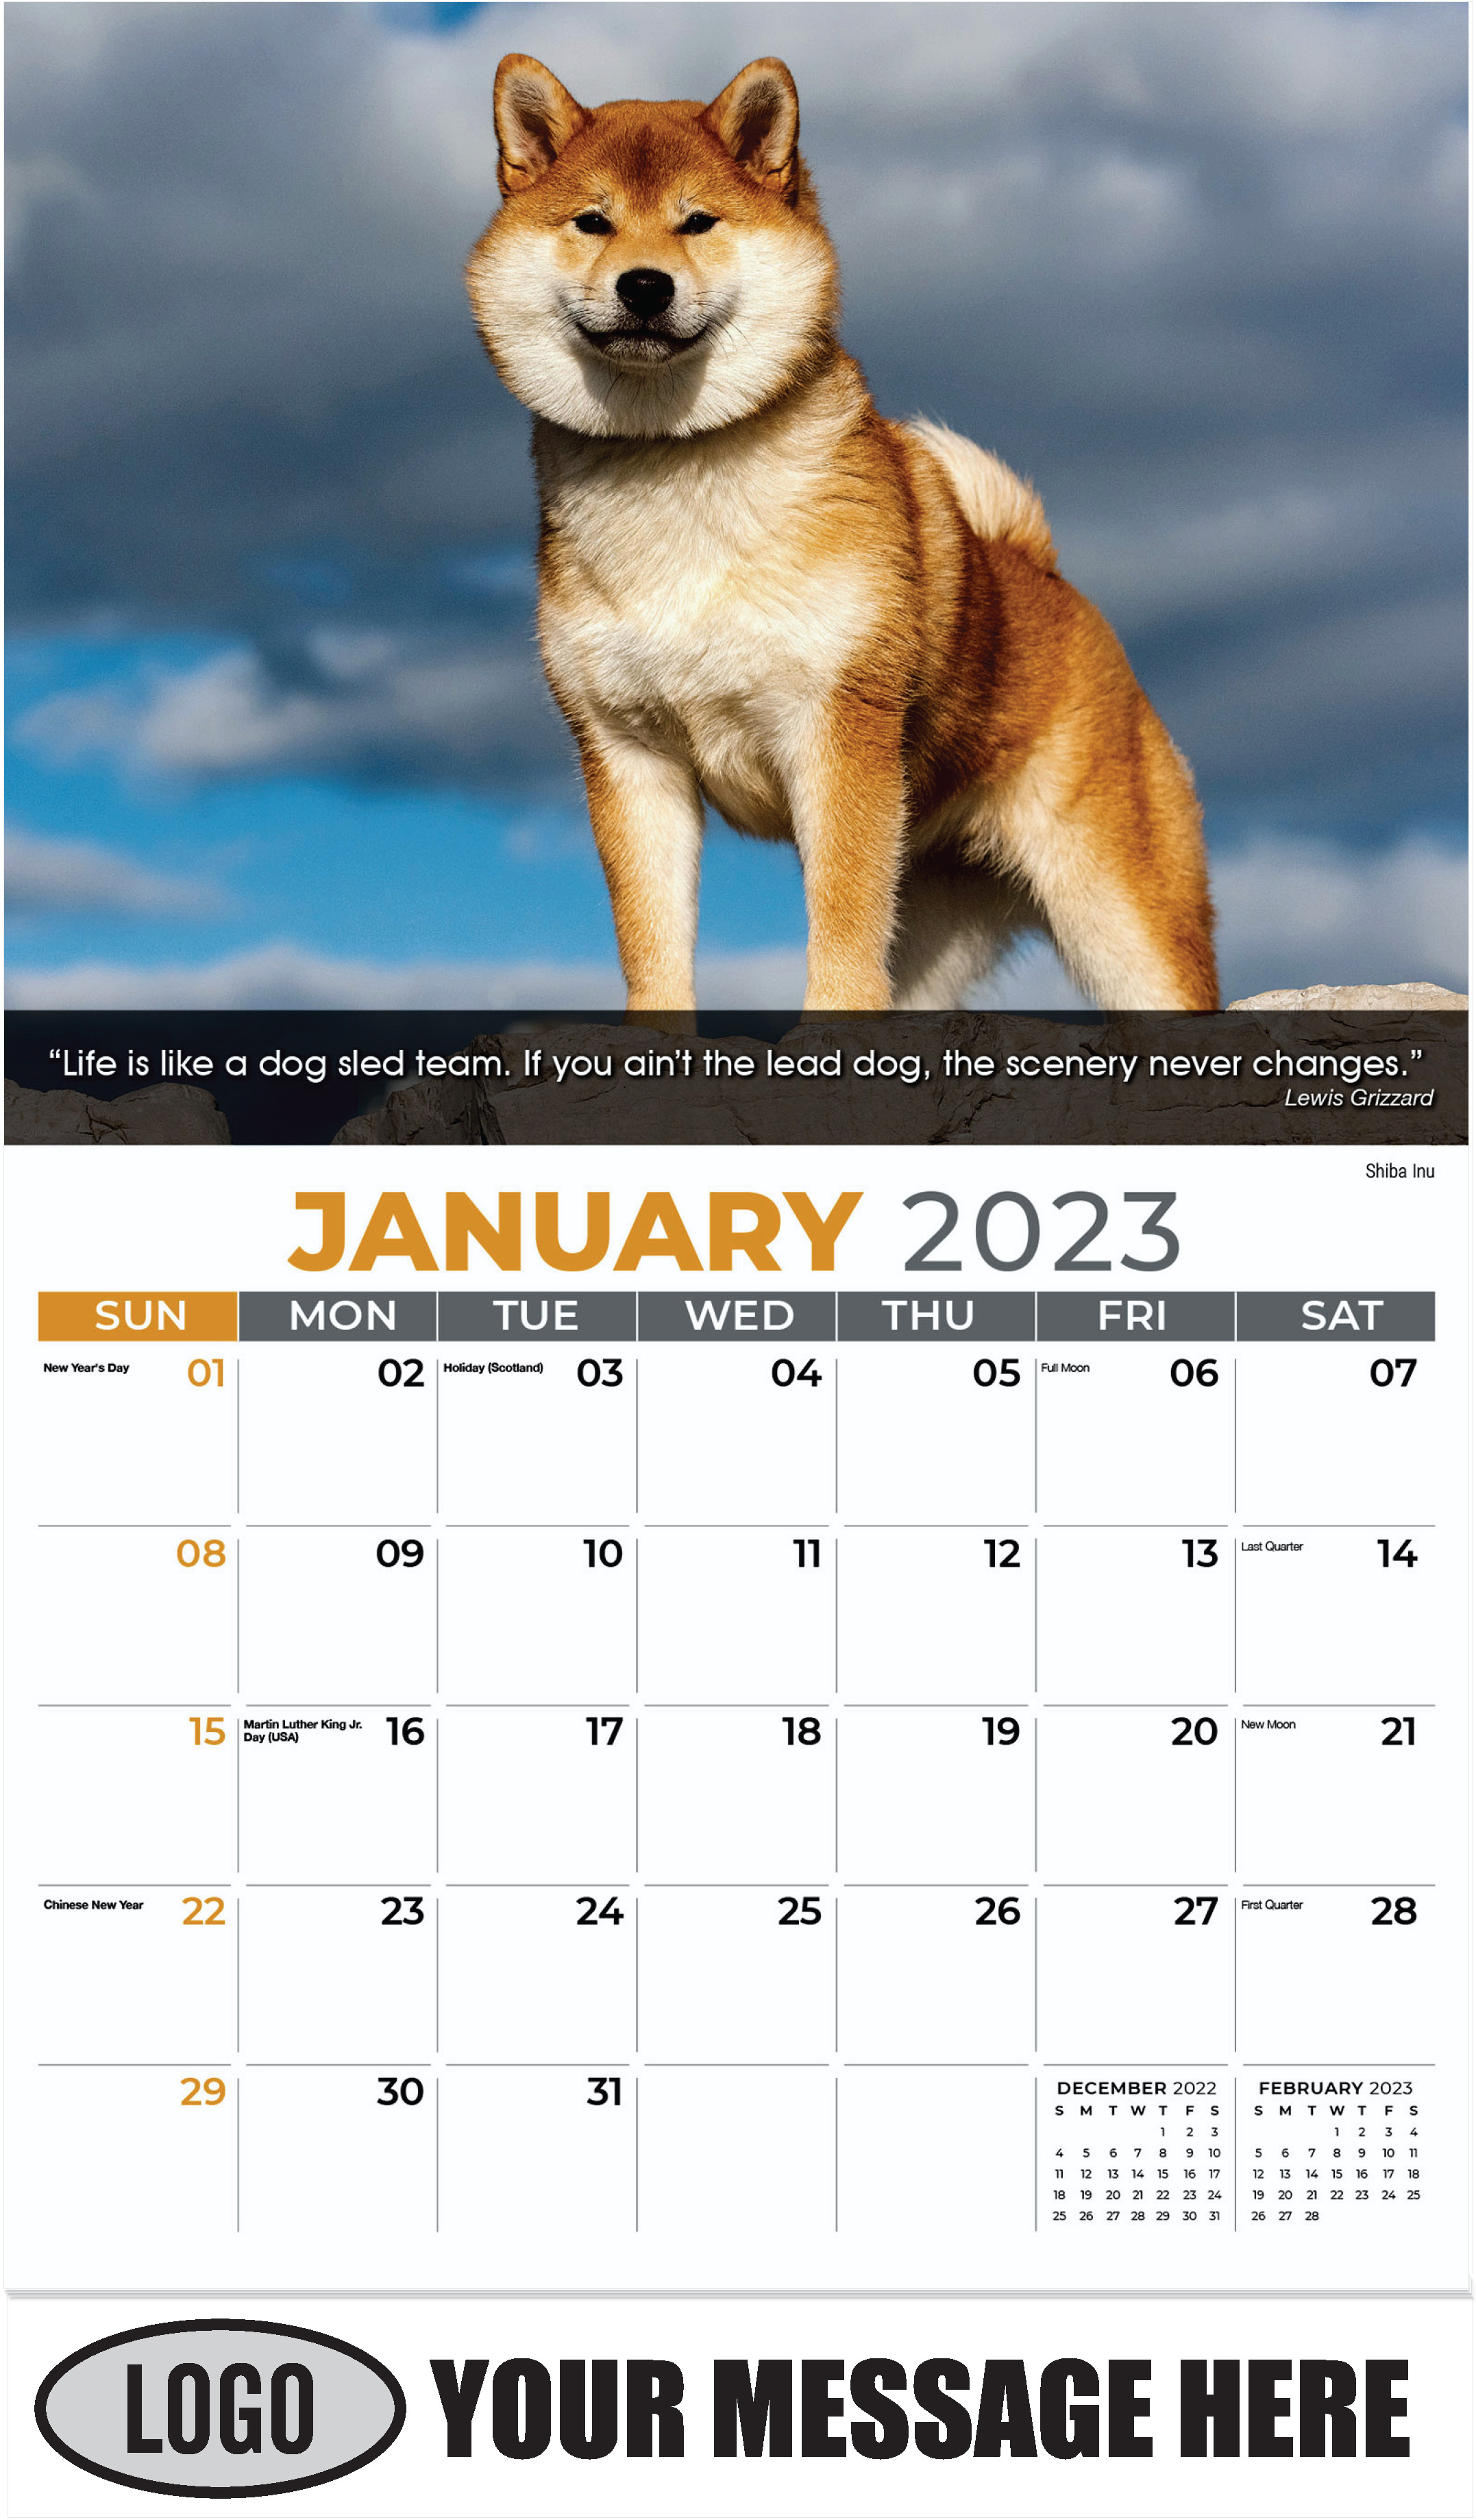 Shiba Inu - January - Dogs, ''Man's Best Friends'' 2023 Promotional Calendar